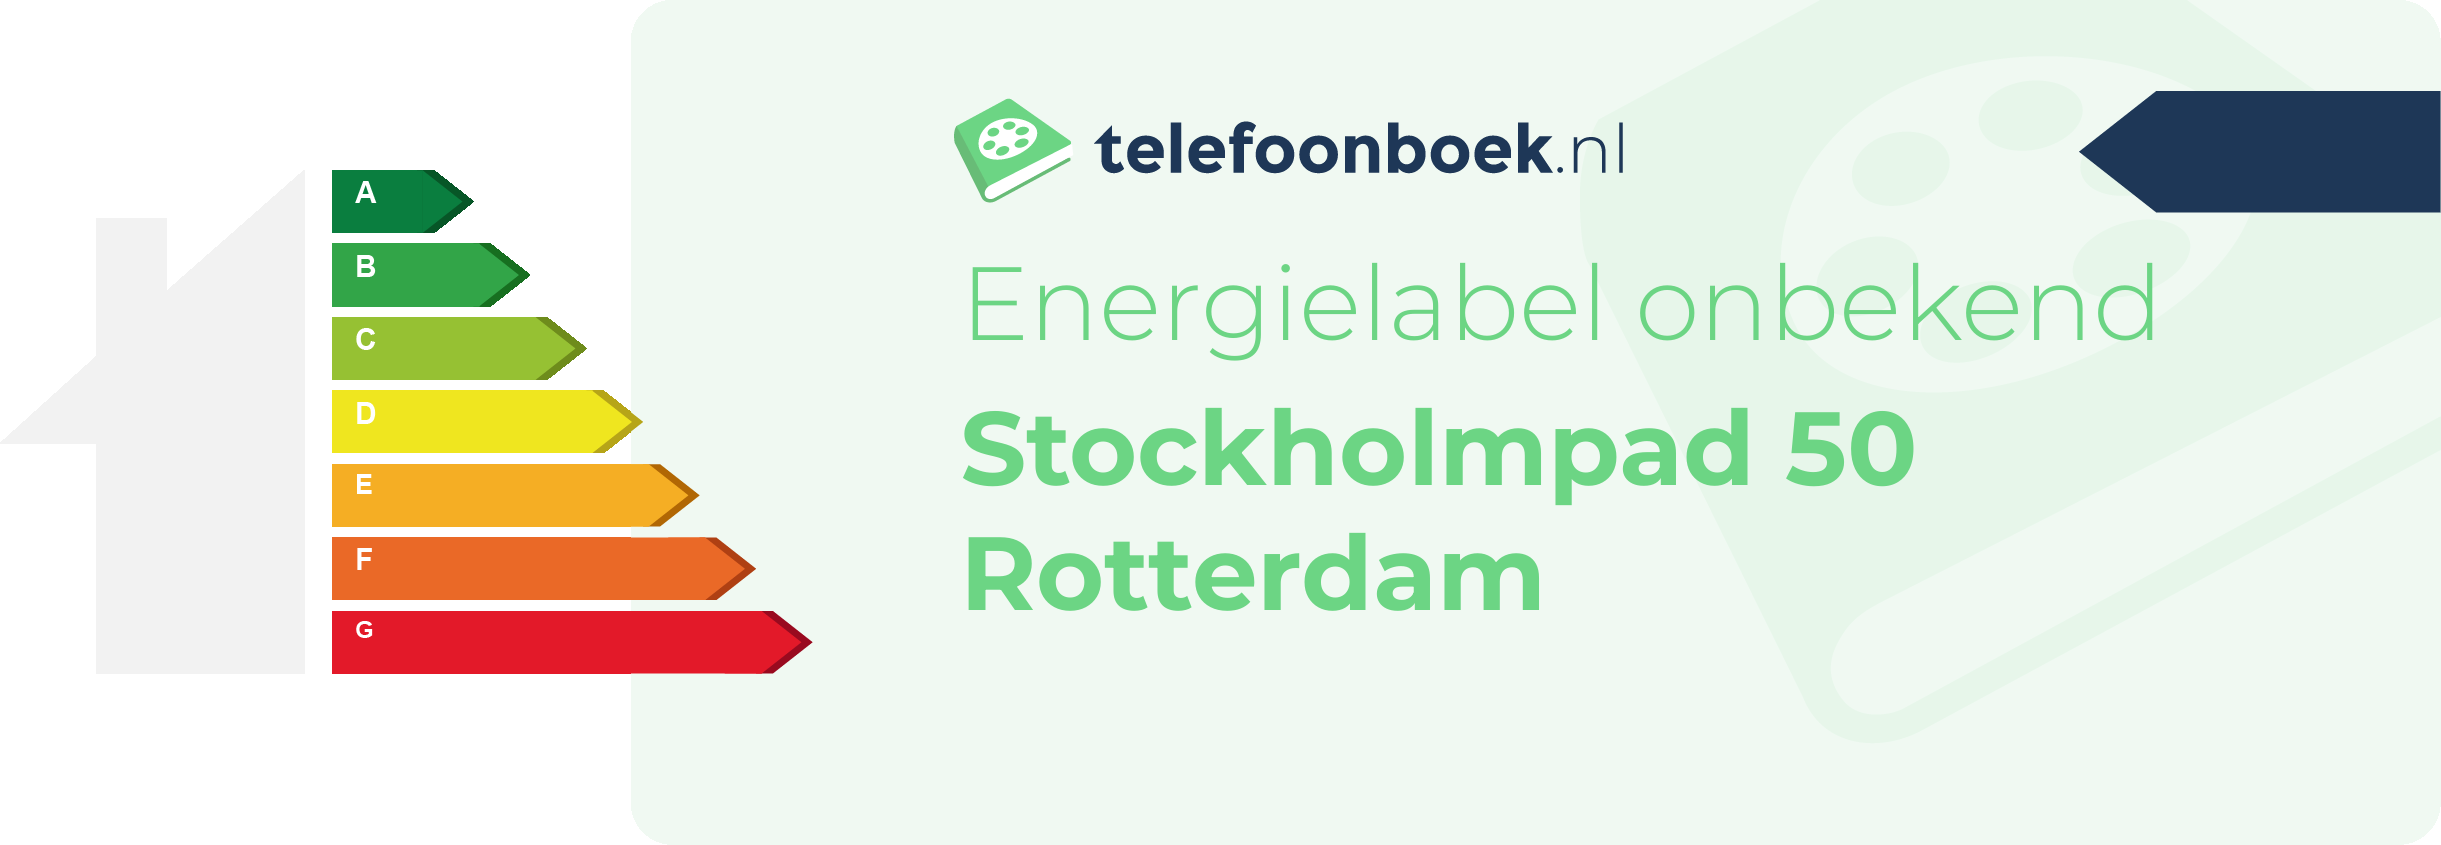 Energielabel Stockholmpad 50 Rotterdam